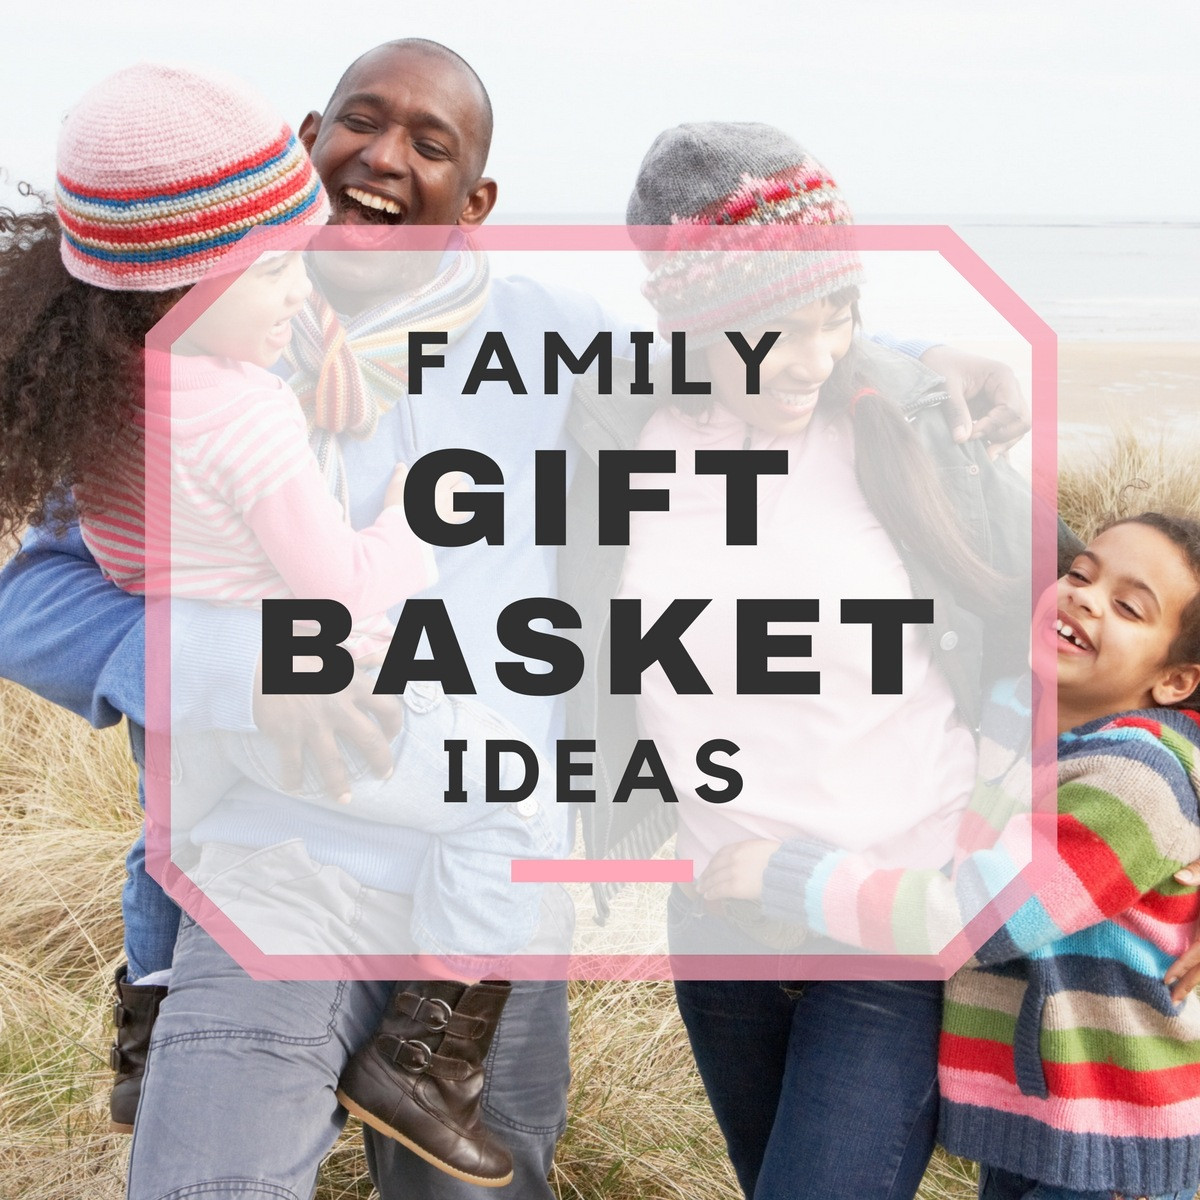 Gift Basket Ideas Families
 10 Best Family Gift Basket Ideas